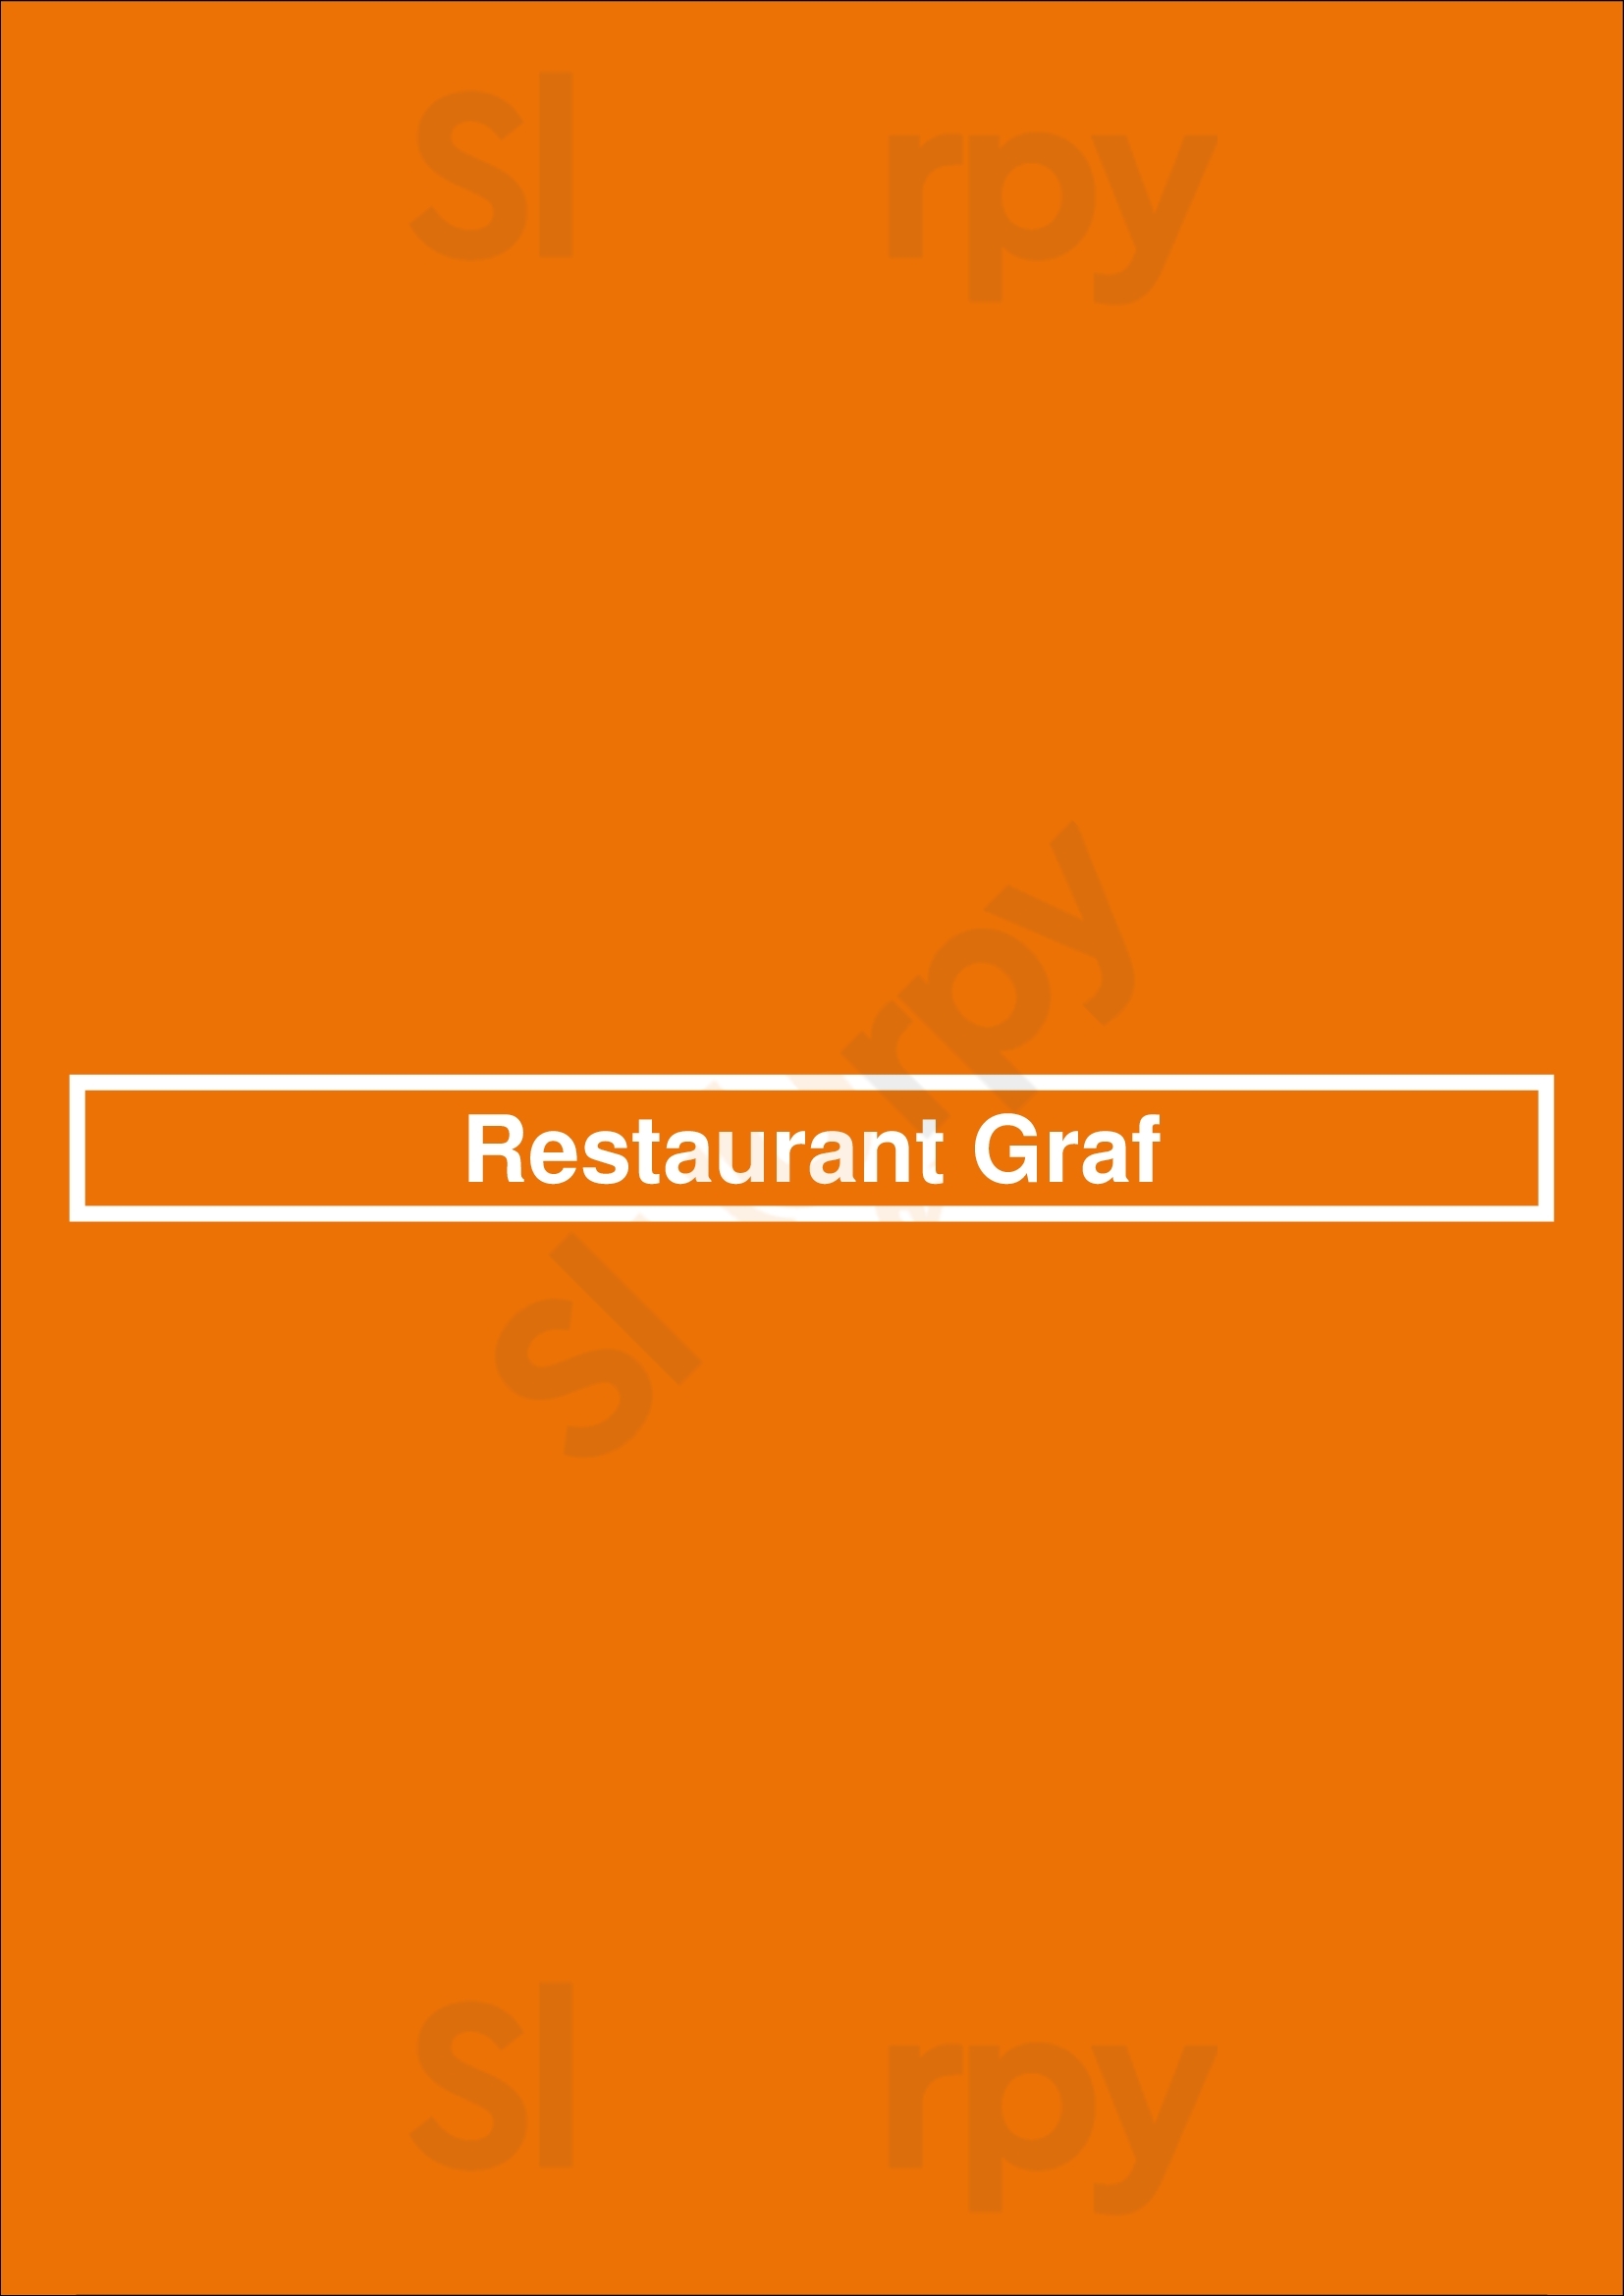 Restaurant Graf Berlin Menu - 1